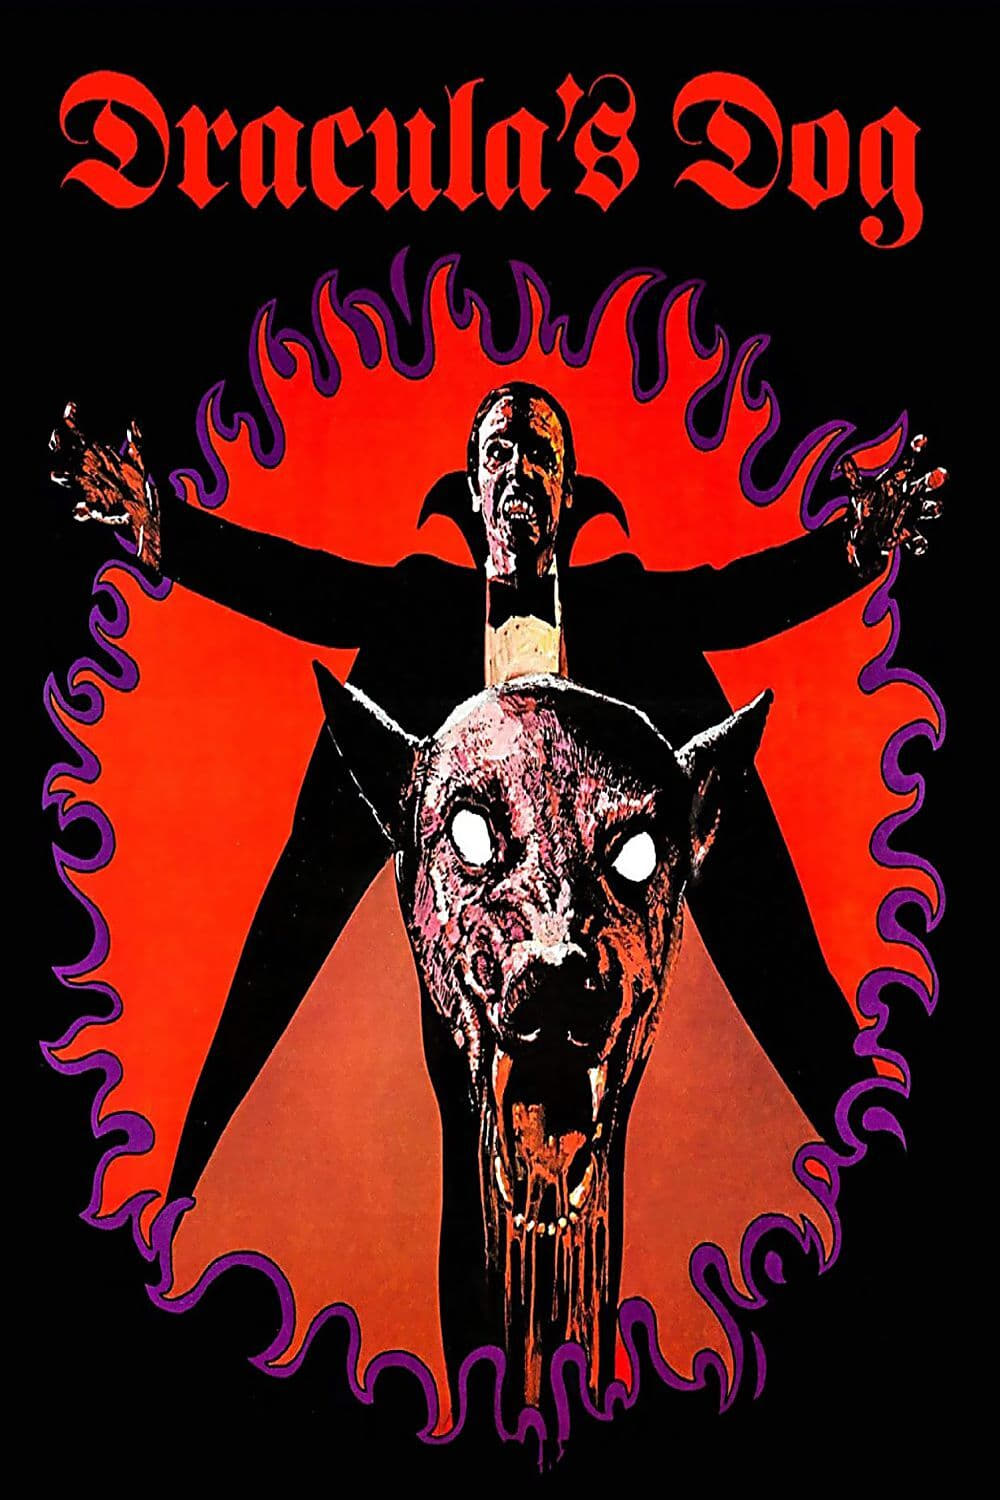 Zoltan - O Cão Vampiro de Drácula (1978)